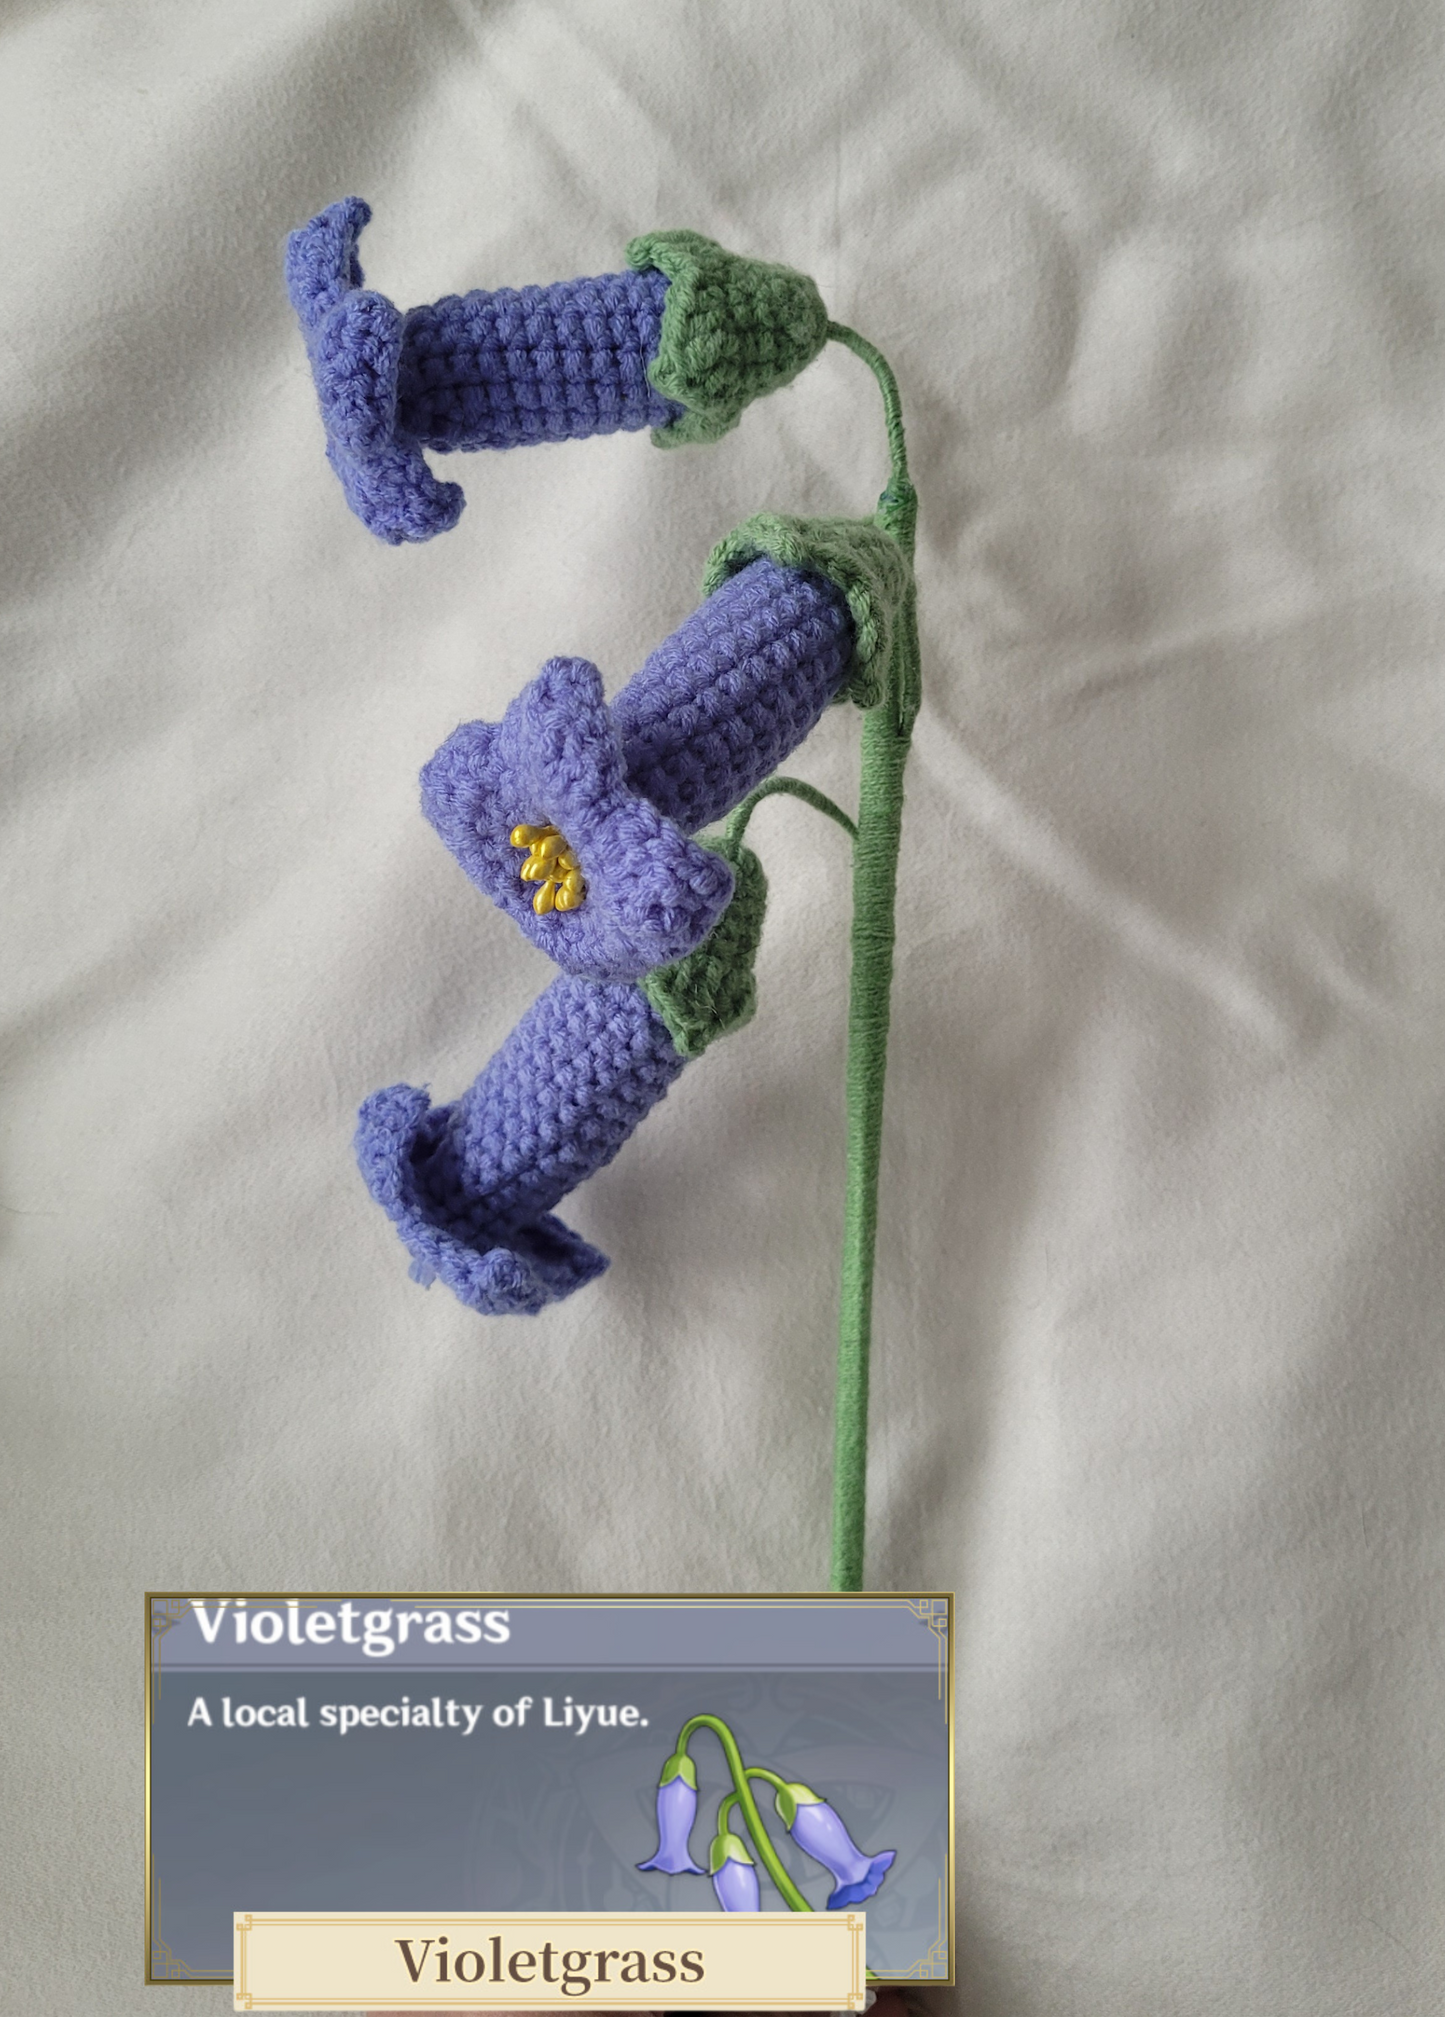 GI: Violetgrass